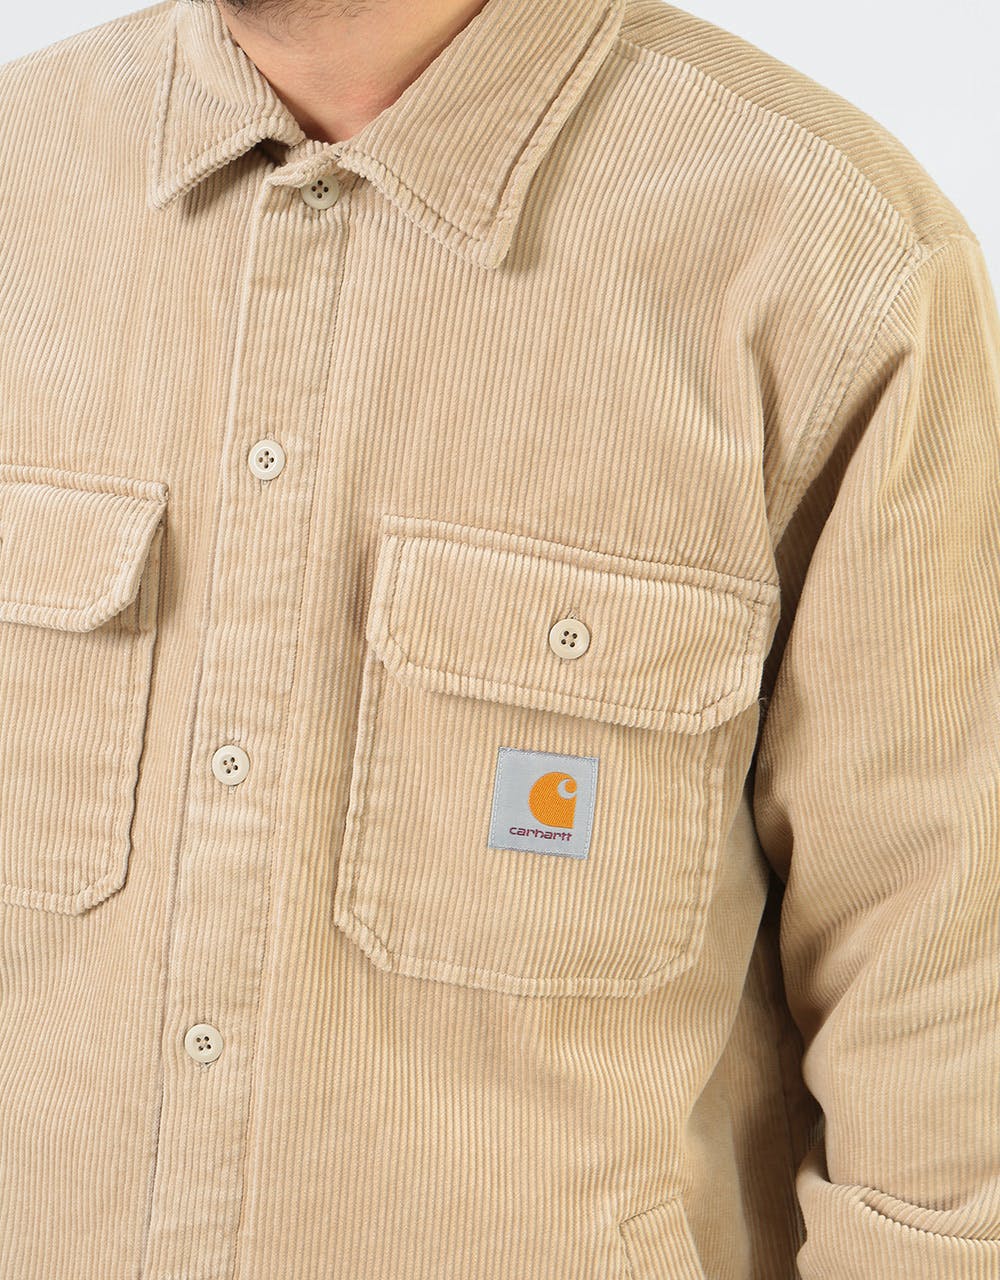 Carhartt WIP Whitsome Shirt Jacket - Wall